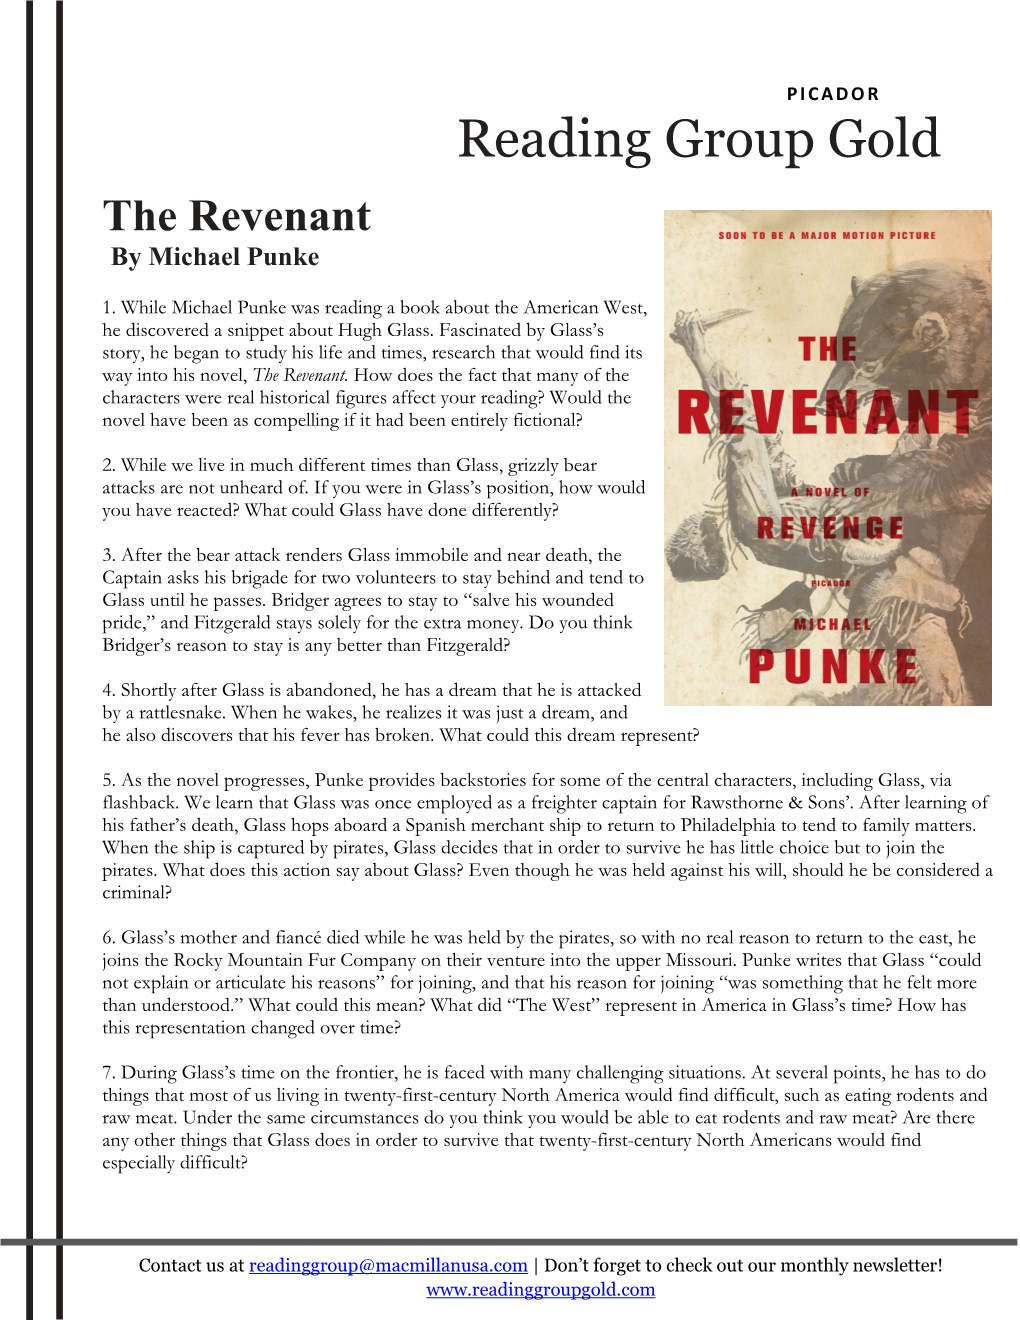 The Revenant by Michael Punke